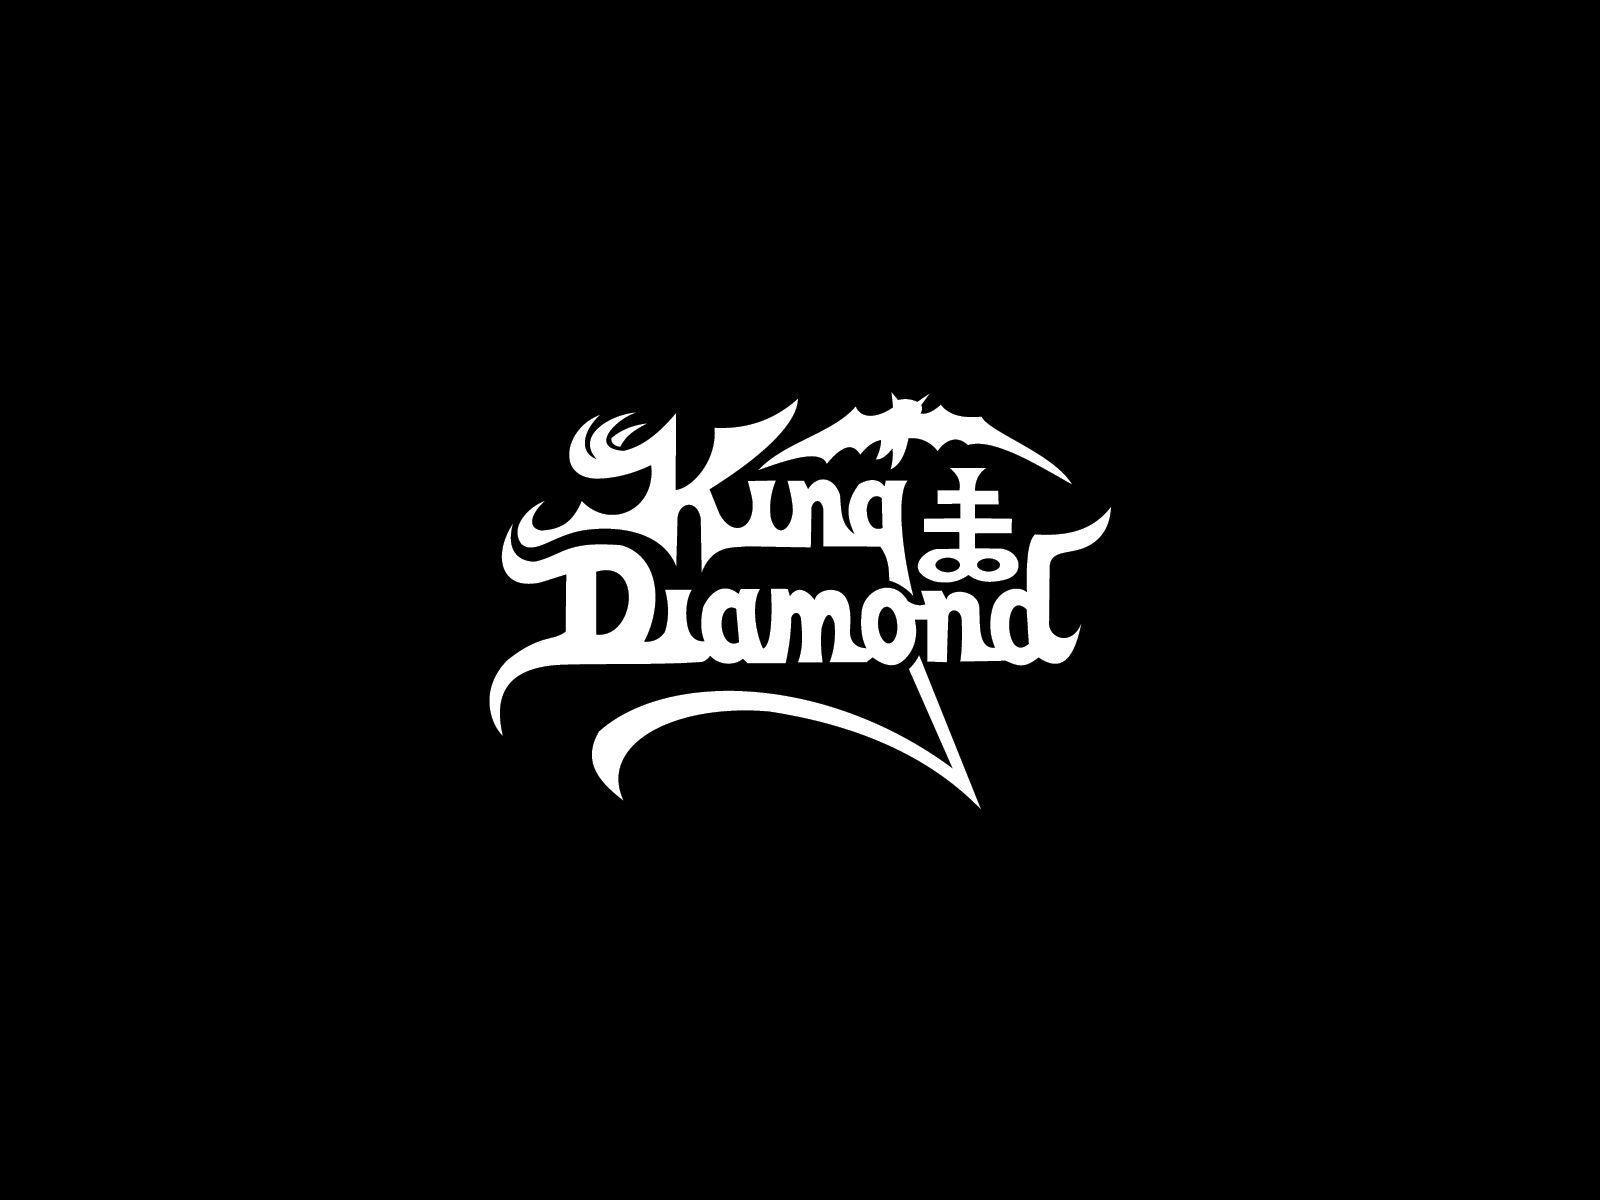 King diamond band logo. Band logos band logos, metal bands